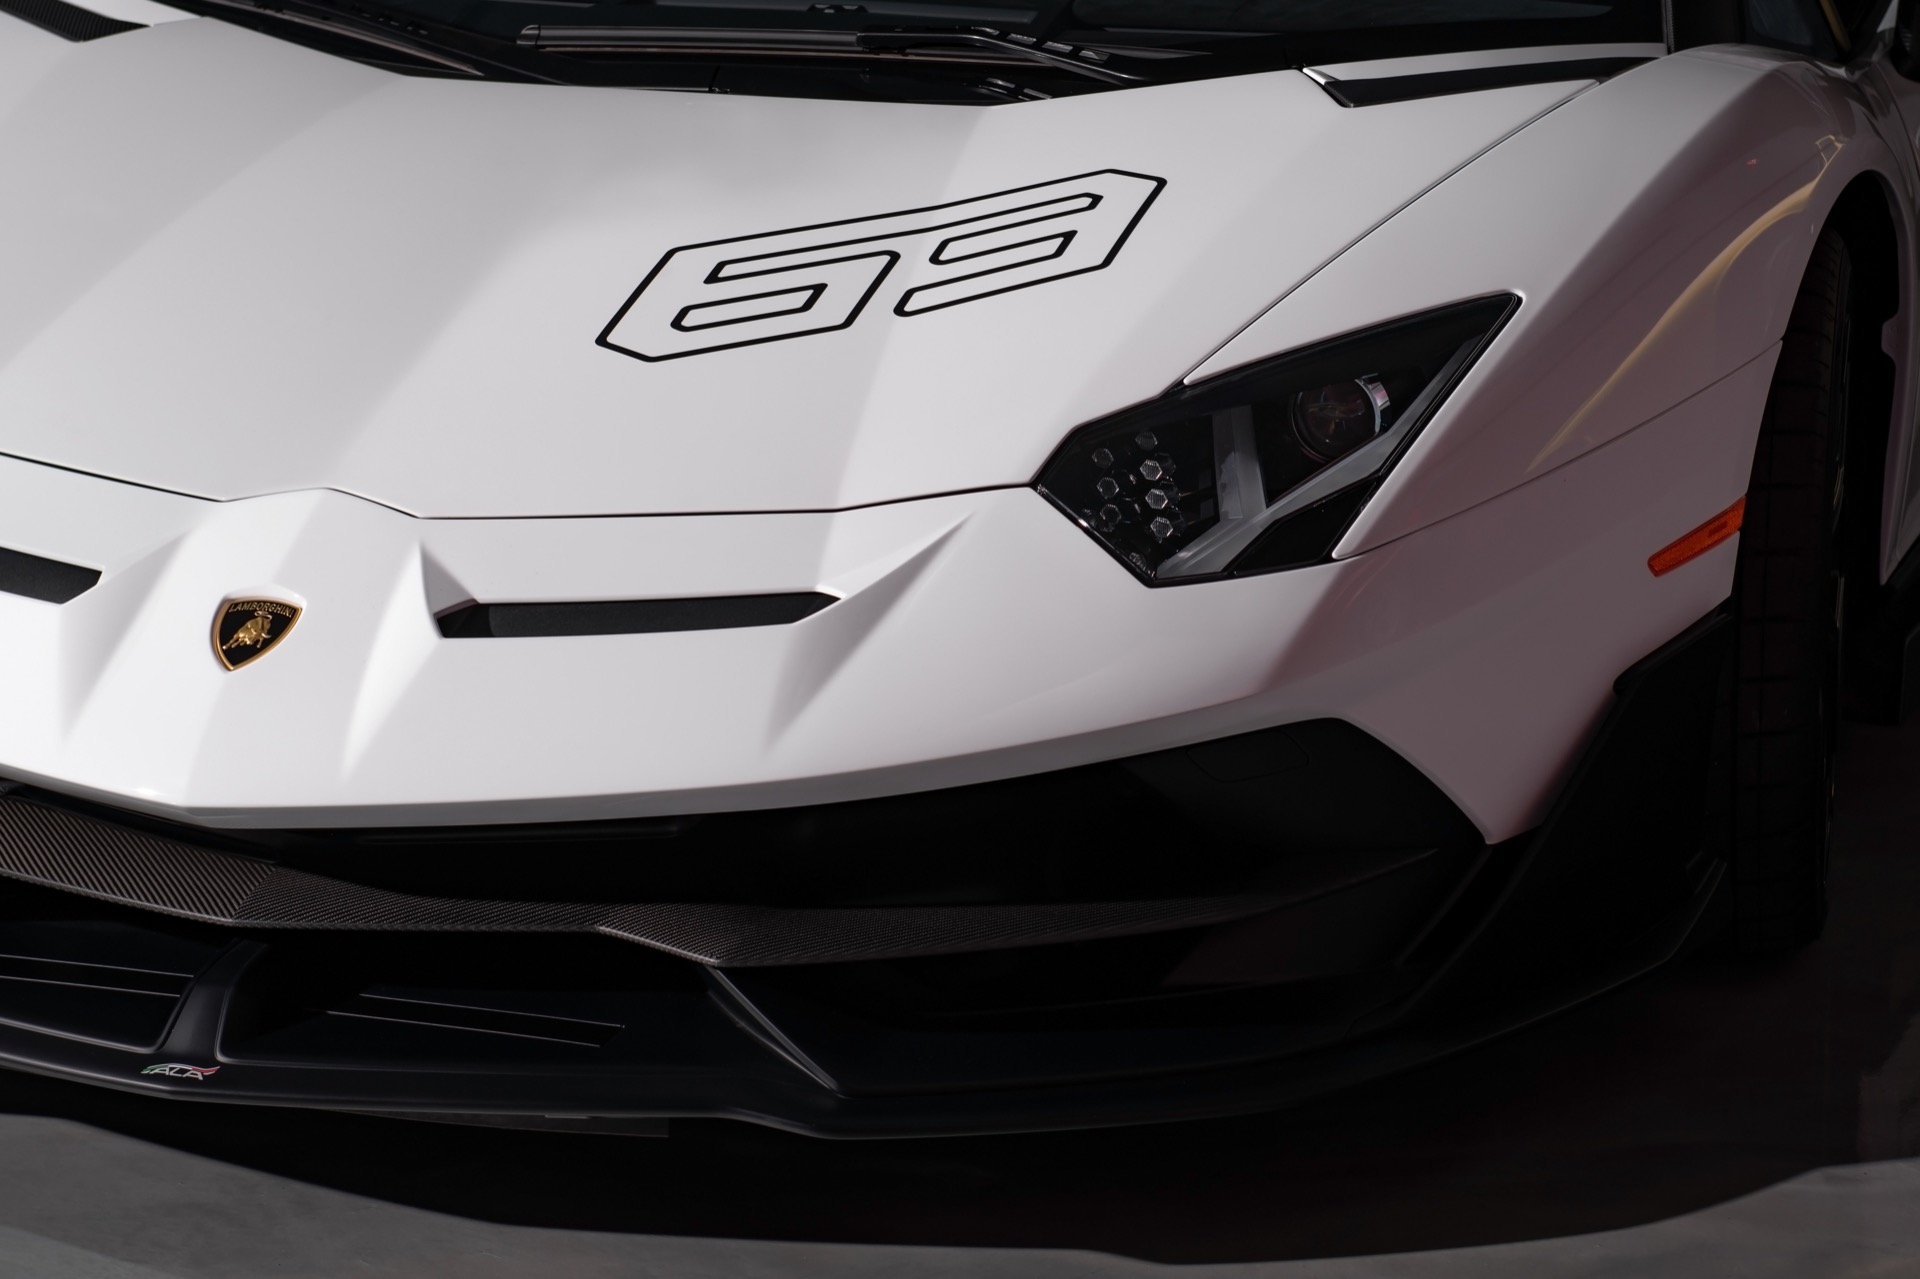 Used-2020-Lamborghini-Aventador-SVJ-63-LP770-4-SVJ63-Coupe-ONLY-120-Miles-SUPER-RARE-EXAMPLE-TONS-of-Carbon